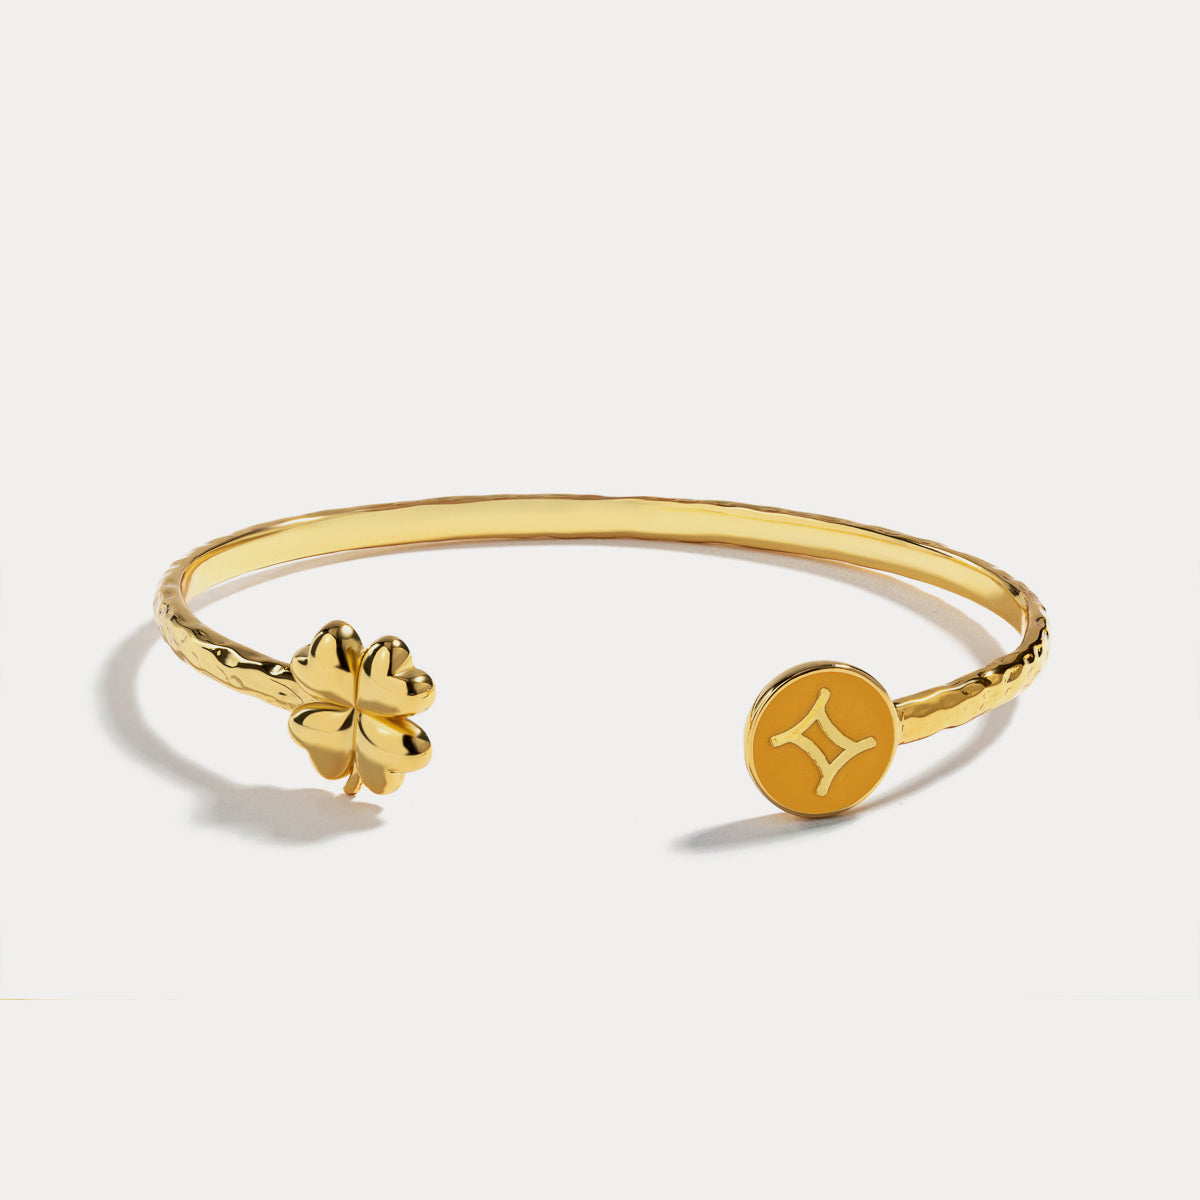 Gemini astrological sign bracelet